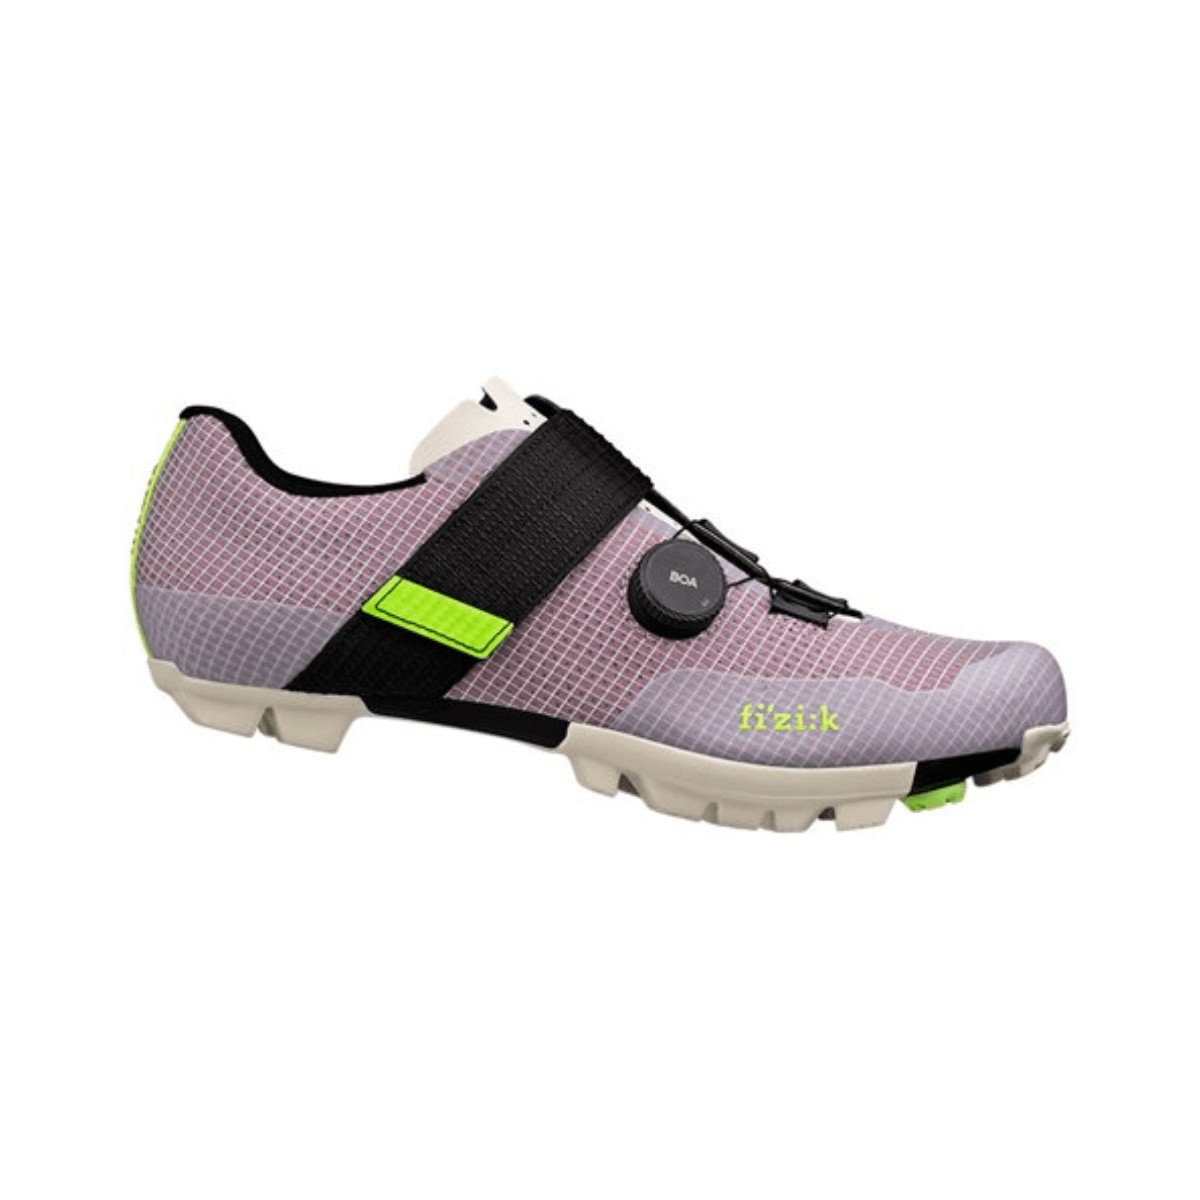 Chaussures Fizik Vento Ferox Carbon Lilas Blanc, Taille 41 - EUR